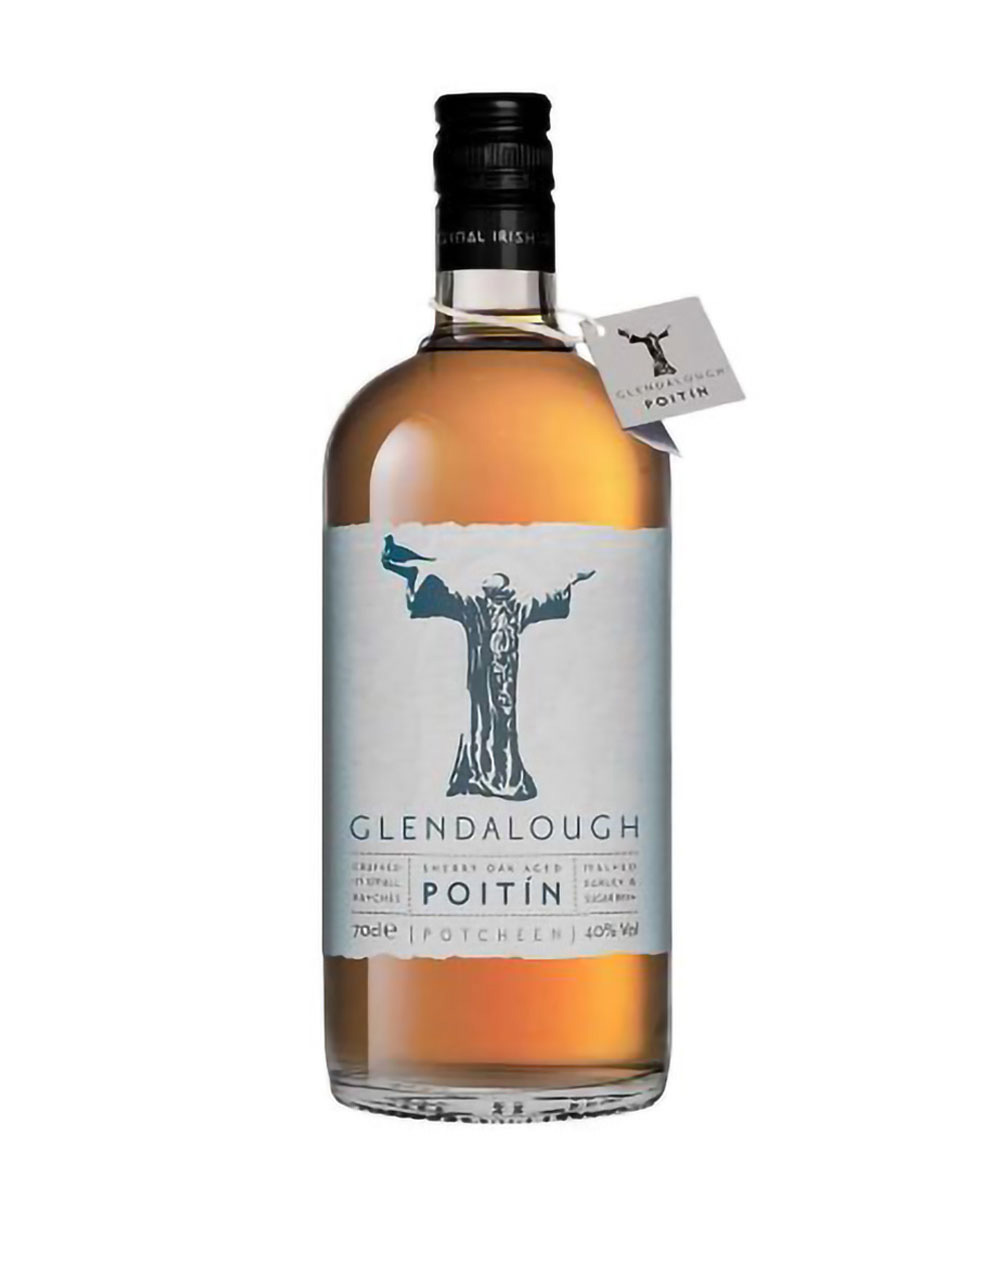 Glendalough Poitin Sherry Cask Finish